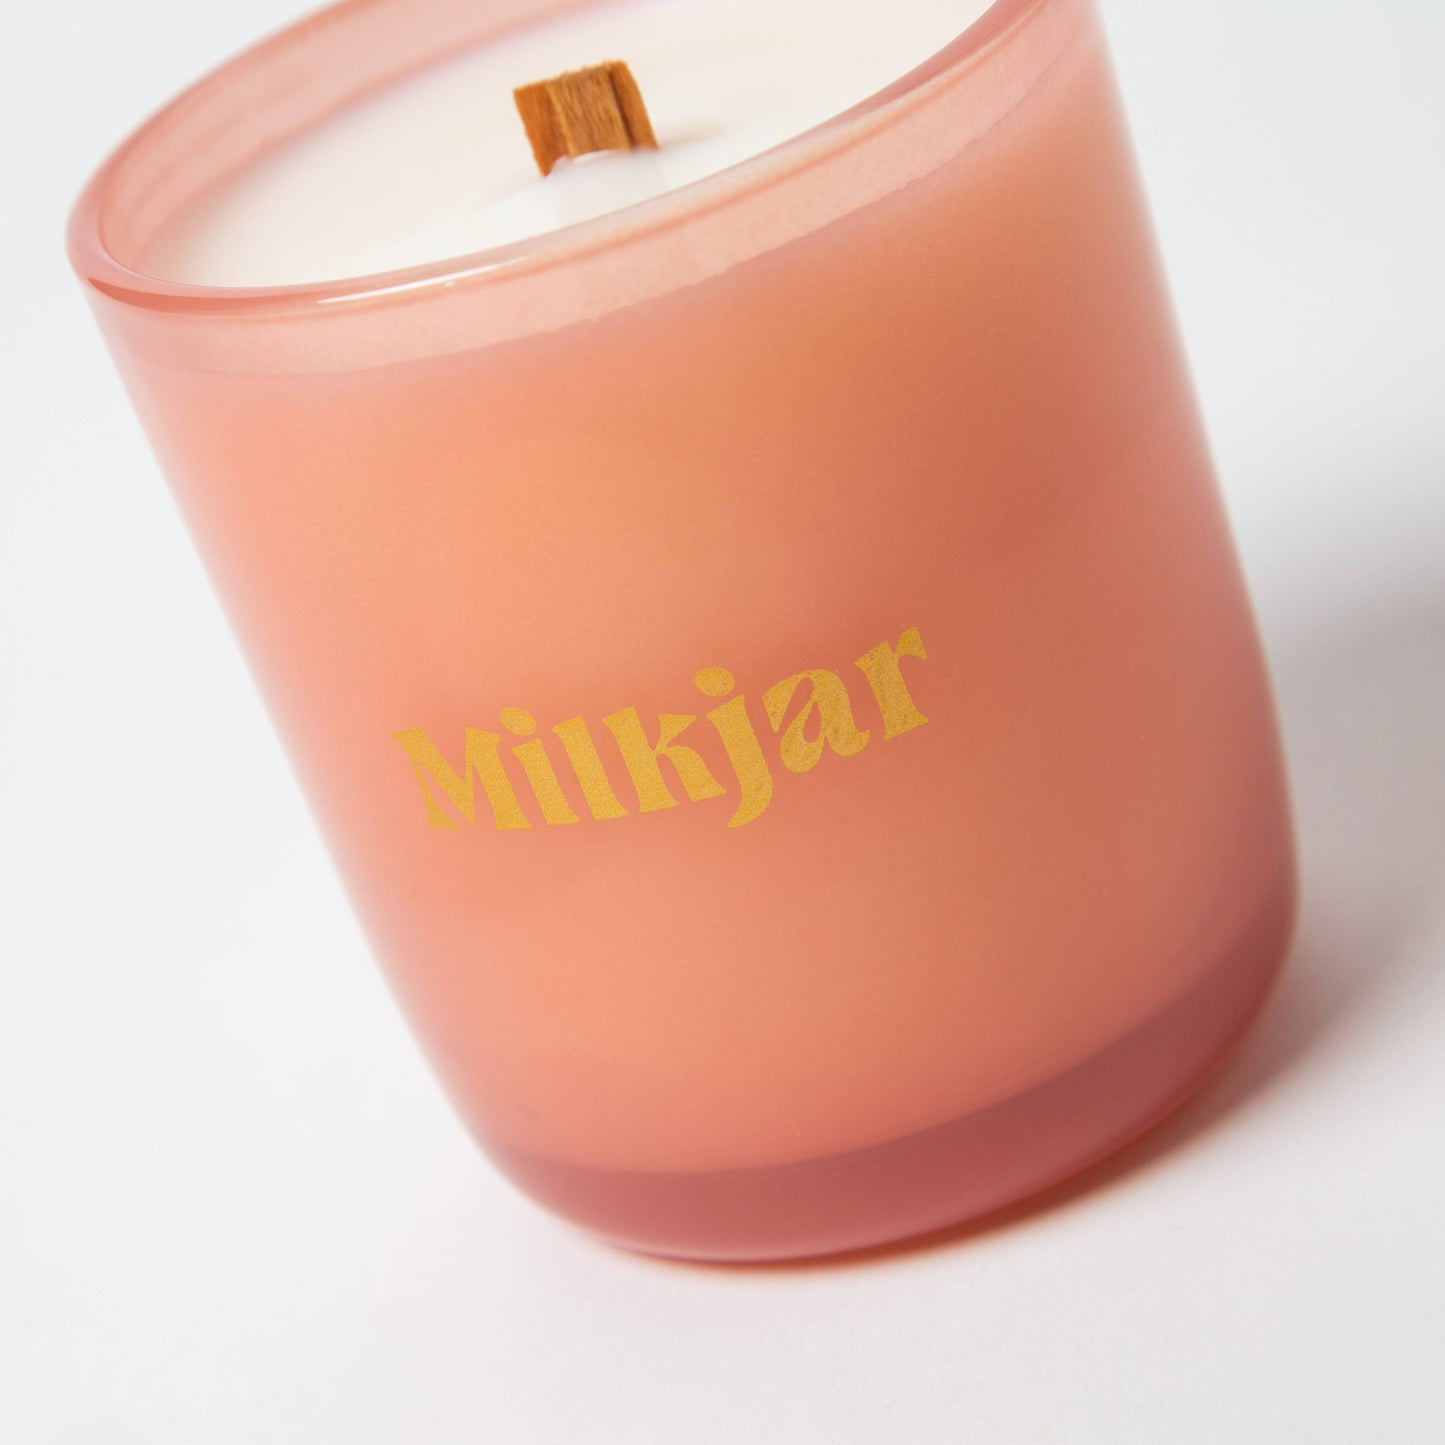 Milk Jar Candle Co. Darjeeling Scented Candle